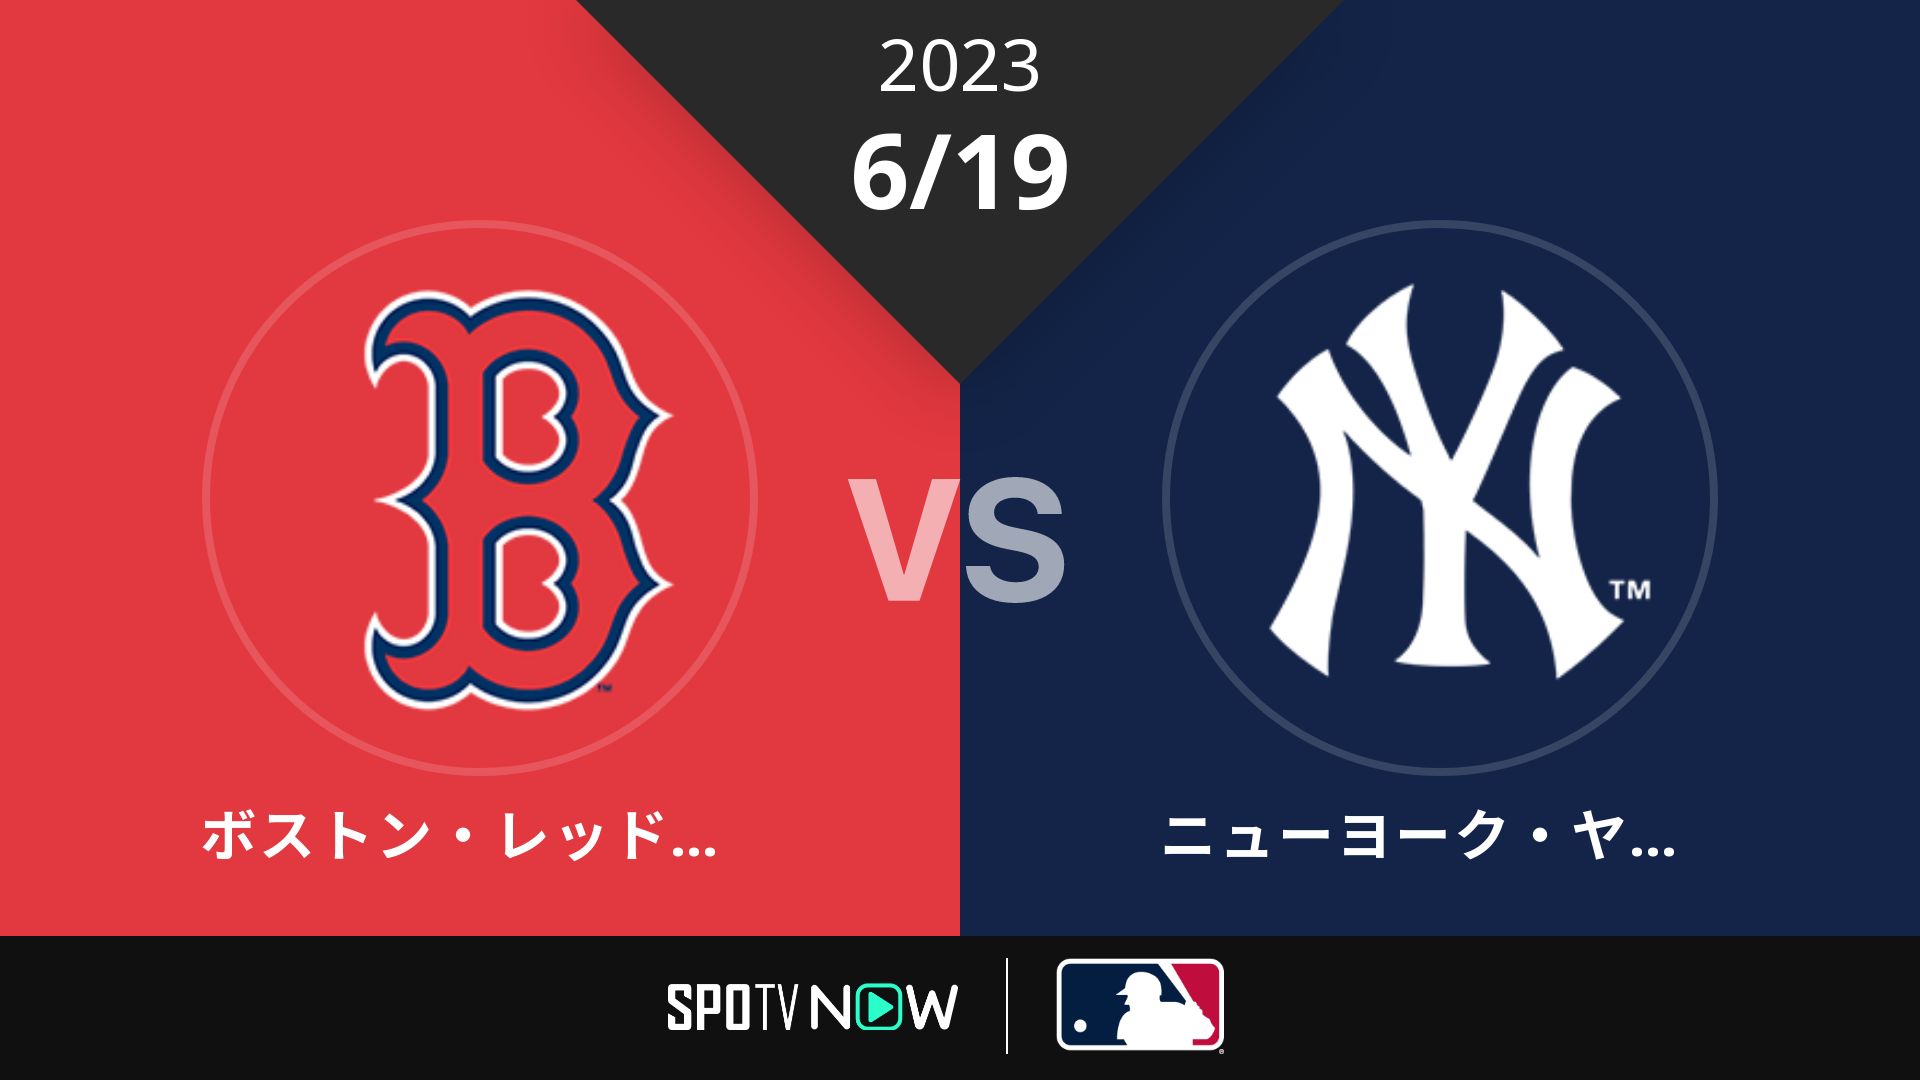 2023/6/19 Rソックス vs ヤンキース [MLB]